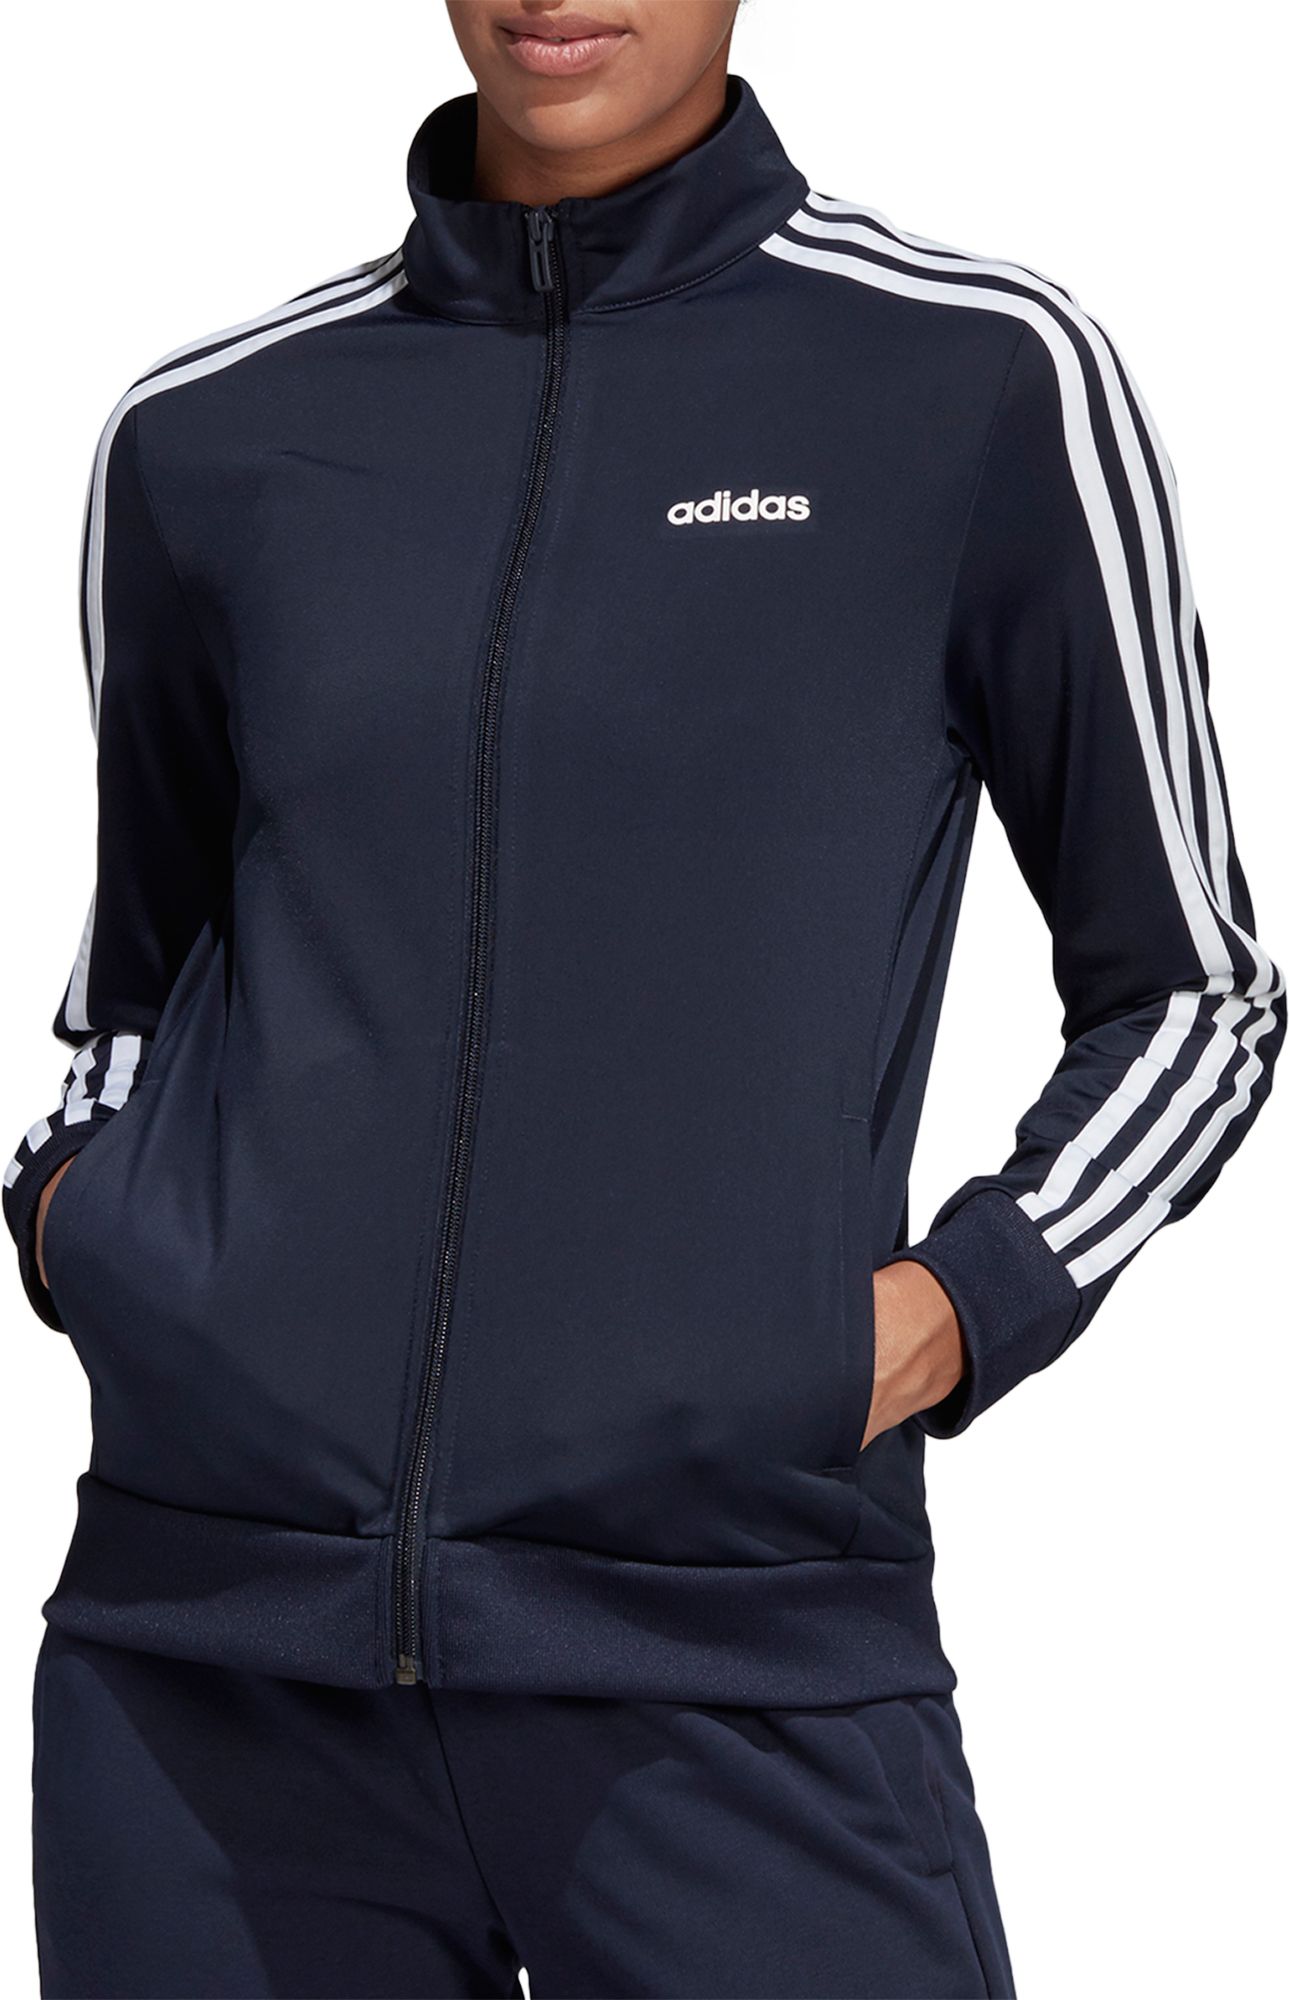 adidas originals adicolor three stripe stadium jacket with hood in black